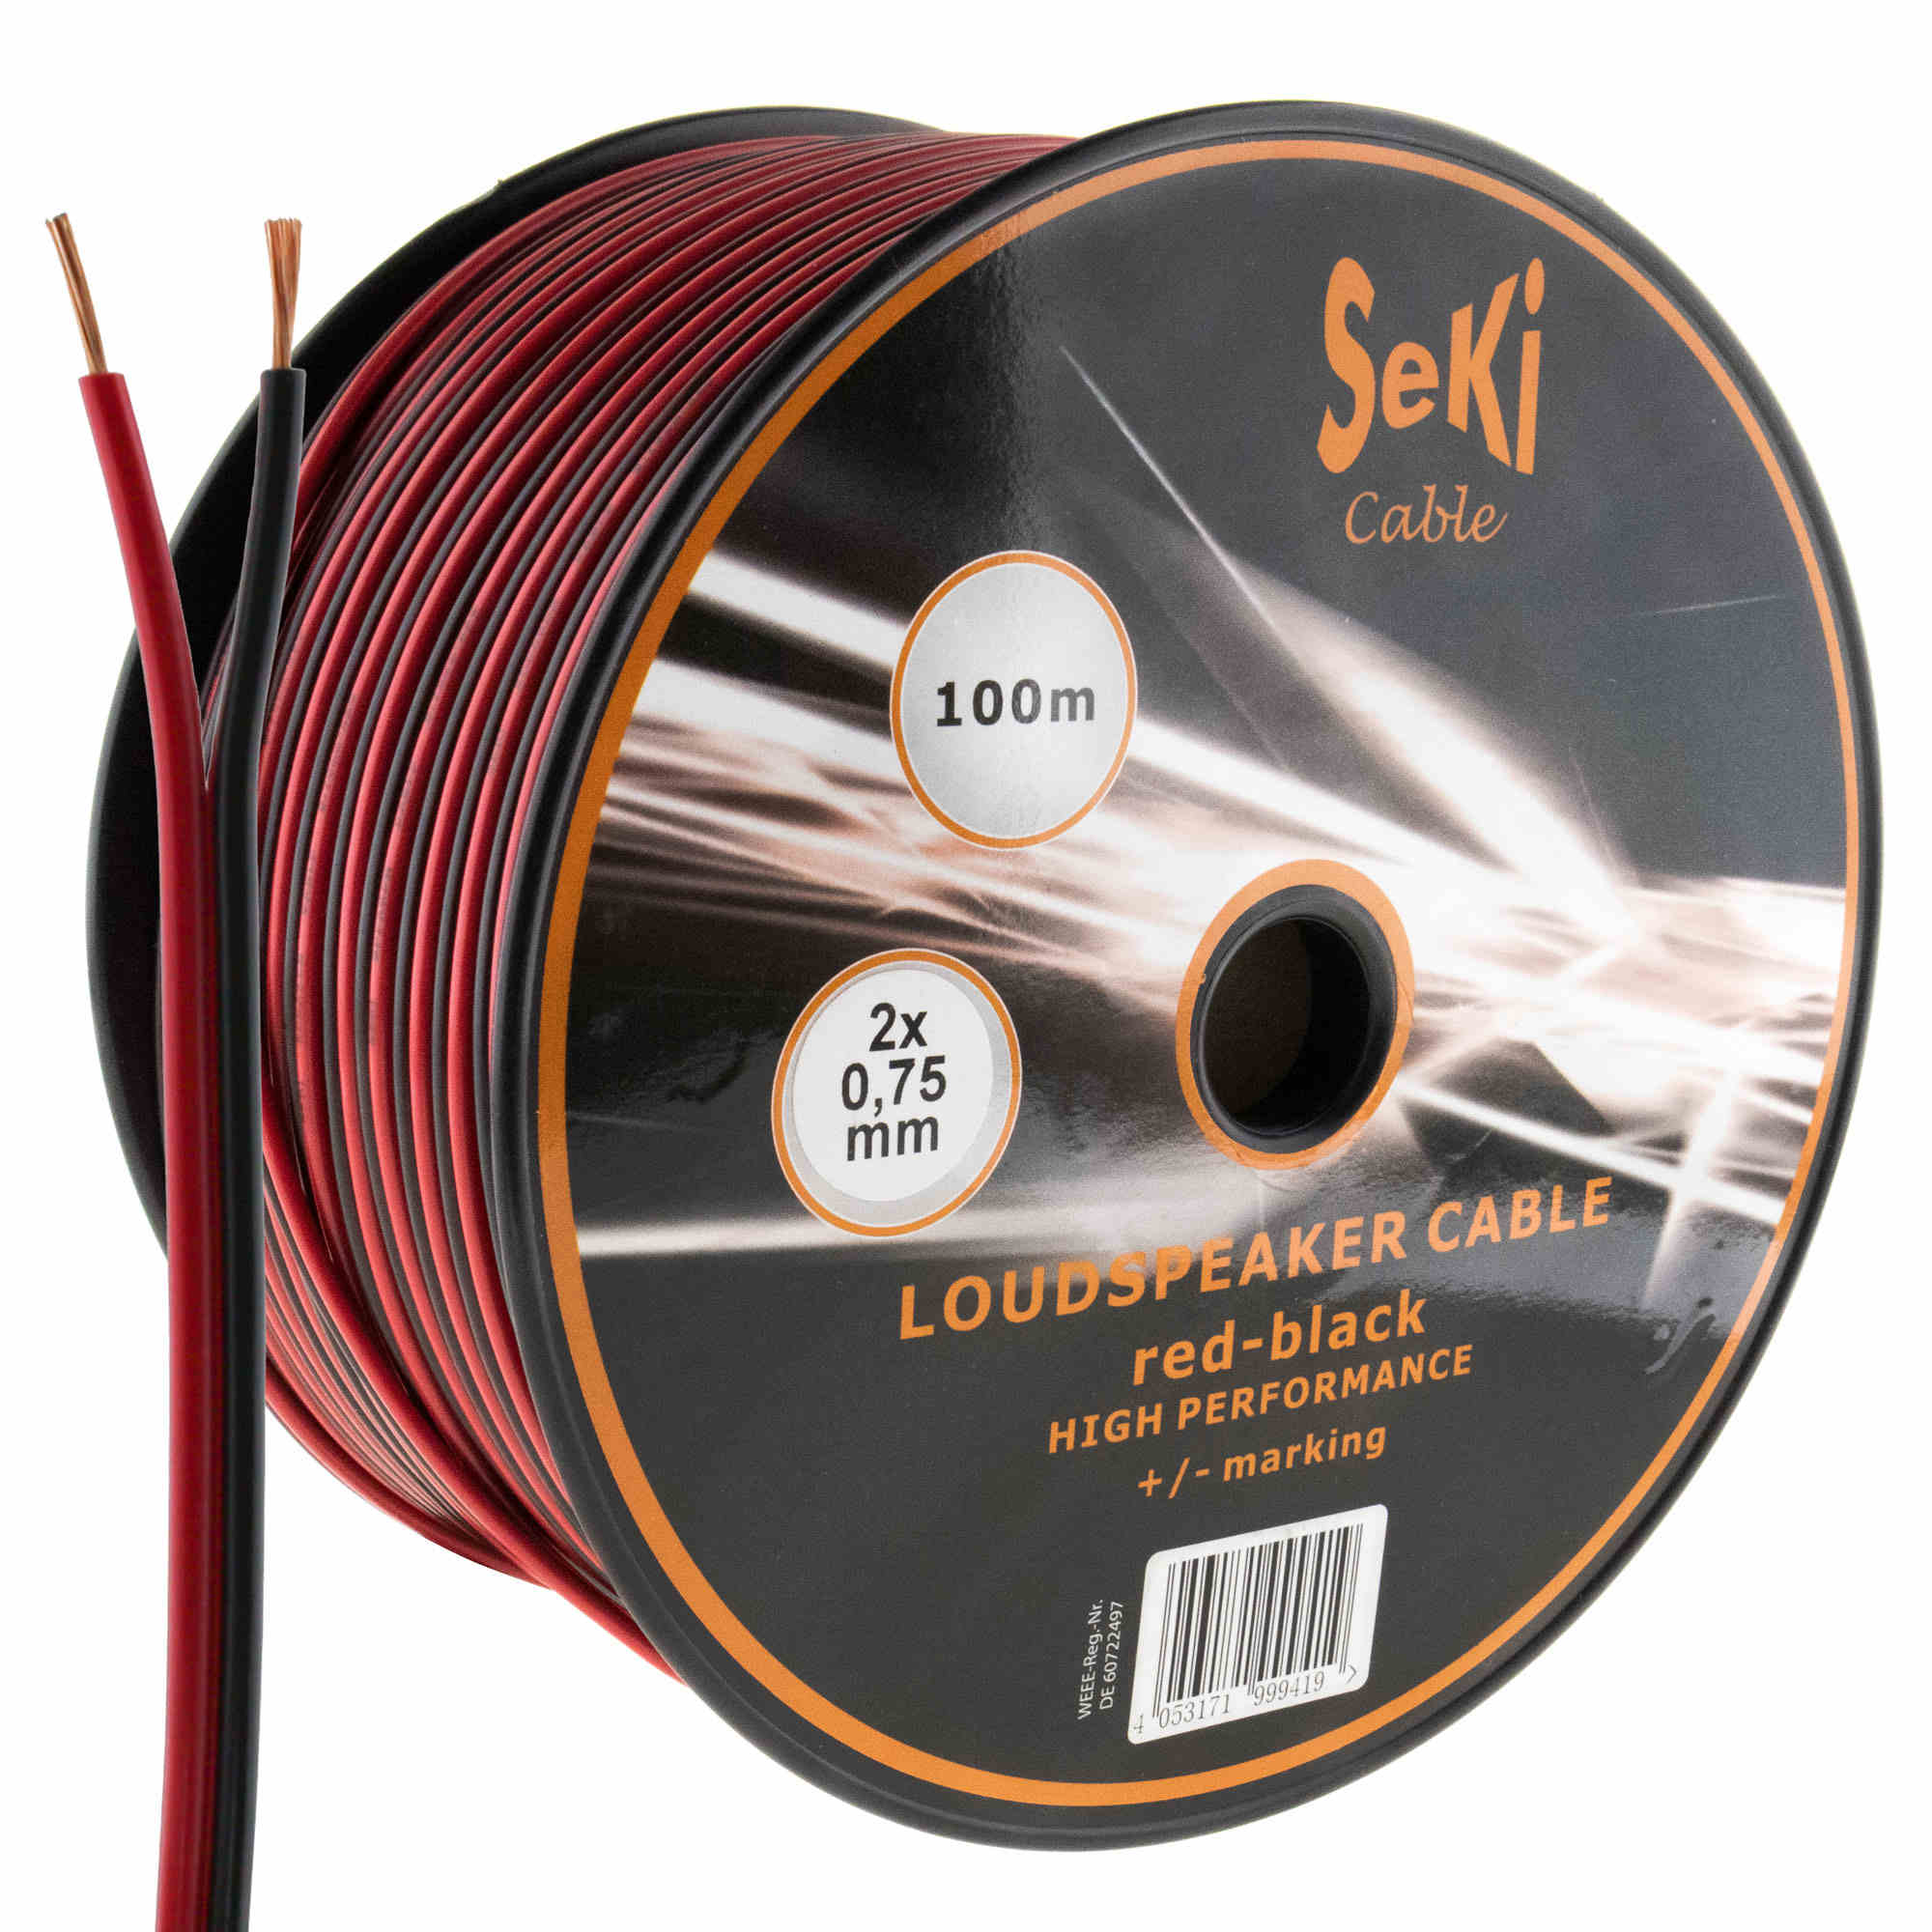 Loudspeaker cable red/black 100m 0.75mm